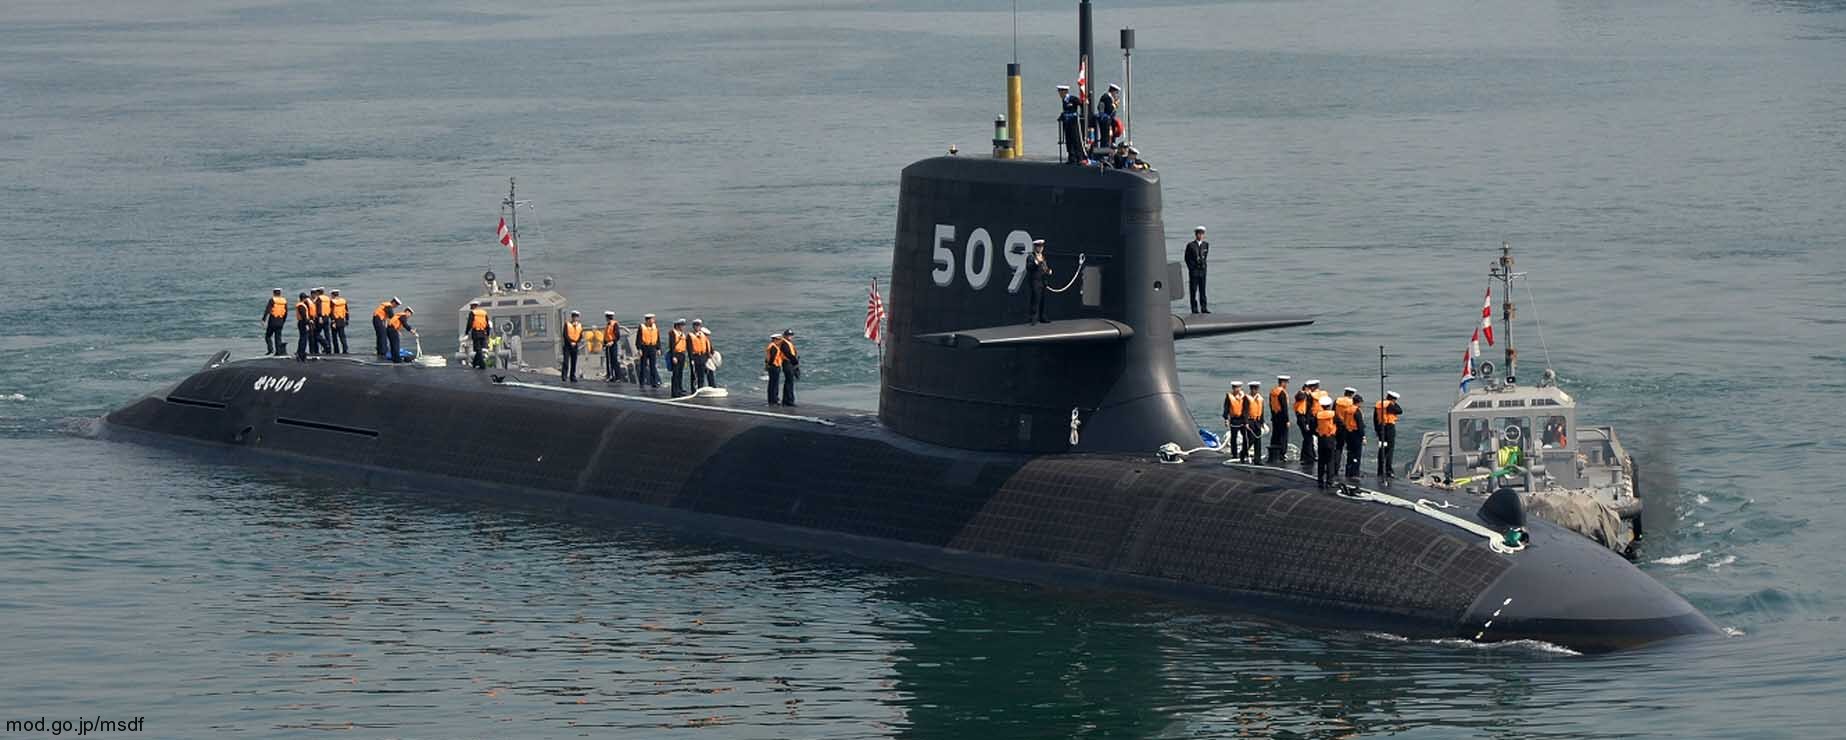 ss-509 js seiryu 16ss soryu class attack submarine ssk japan maritime self defense force jmsdf 03